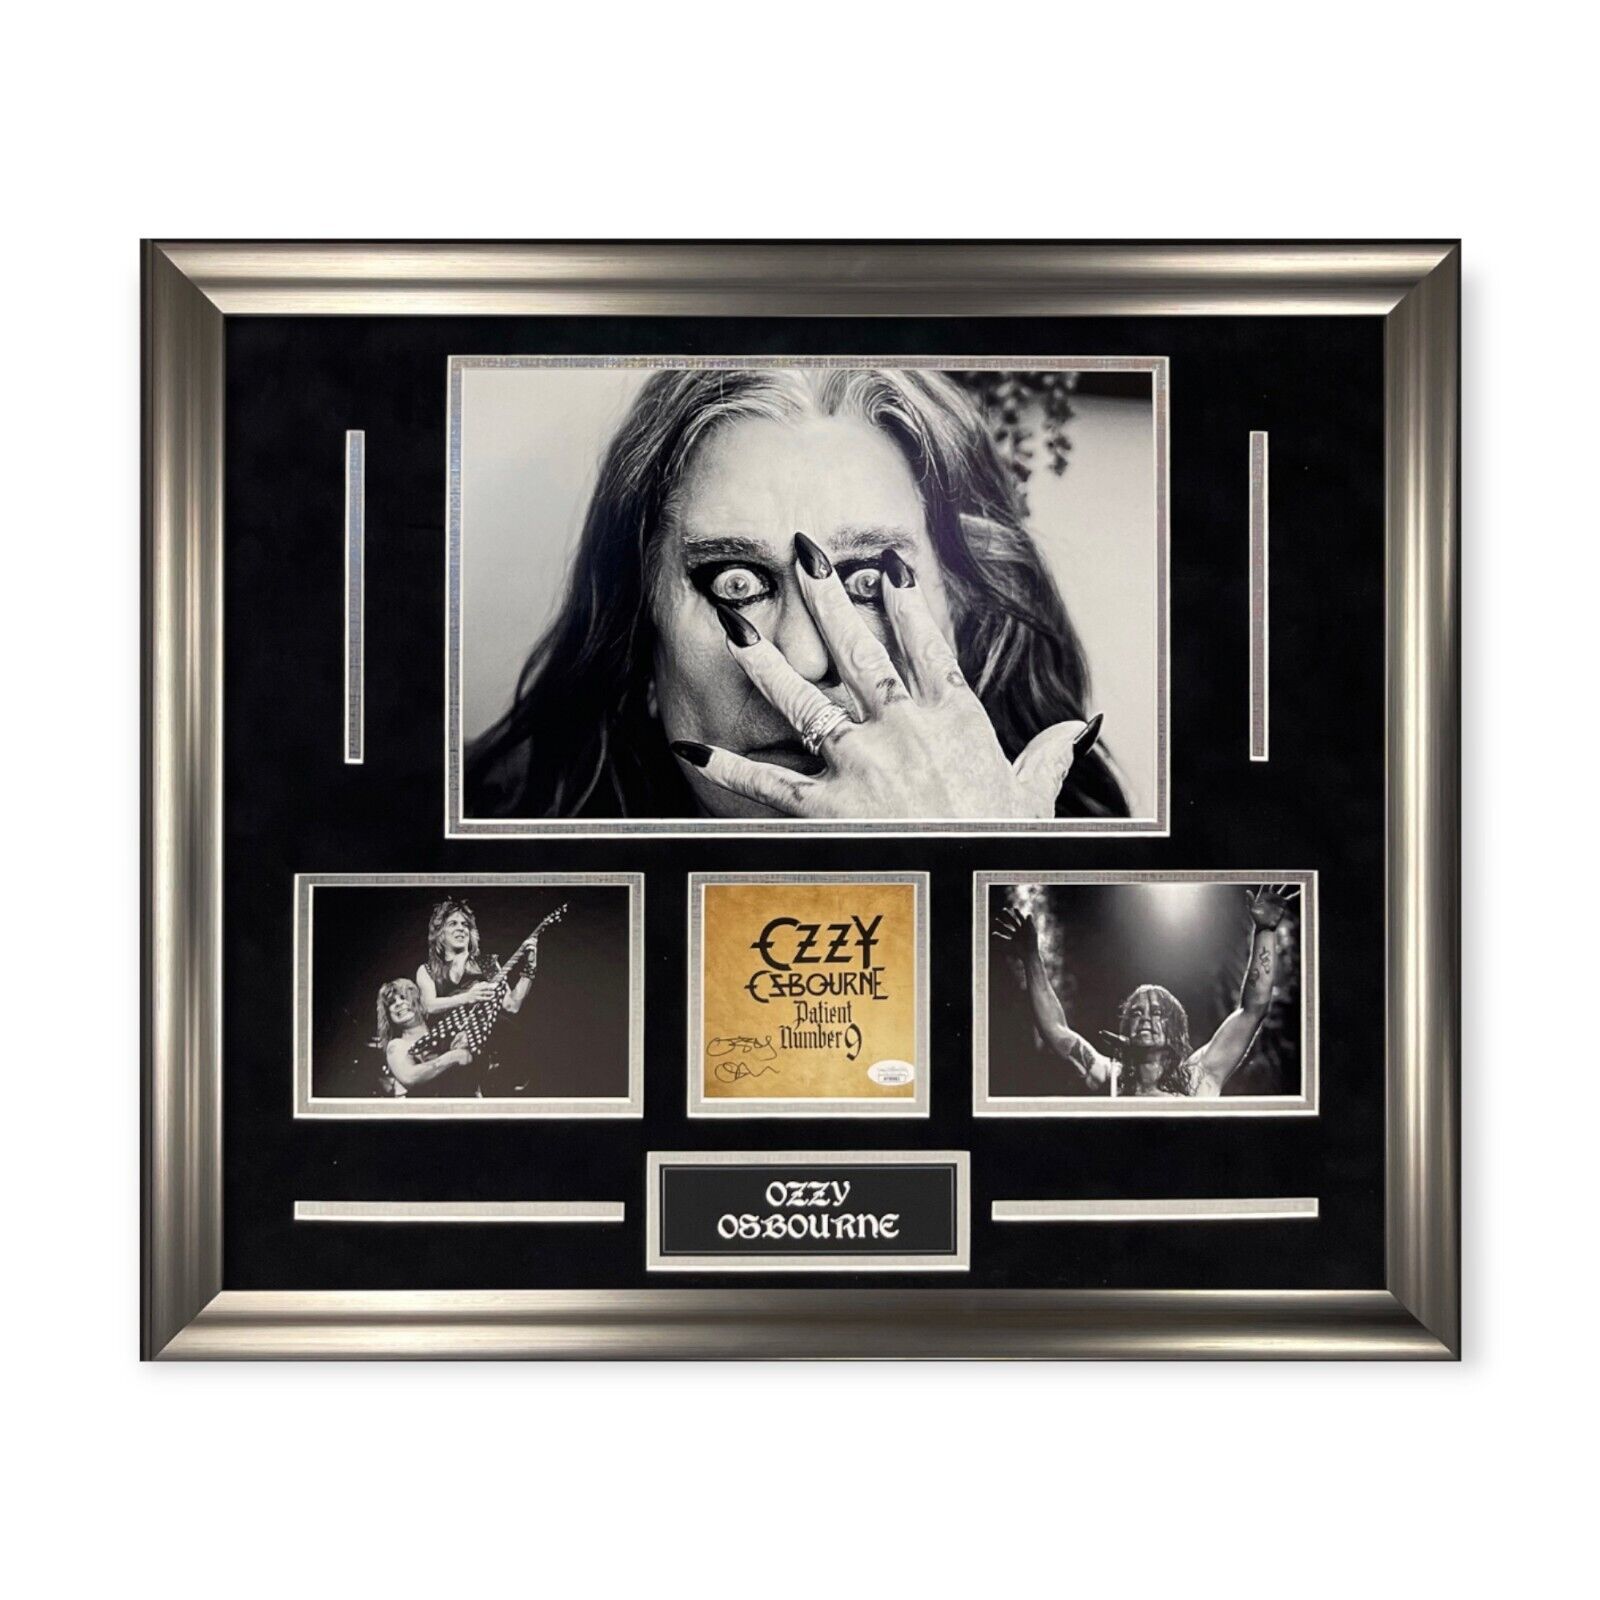 Ozzy Osbourne Autographed CD Cover Collage Framed To 23x27 JSA